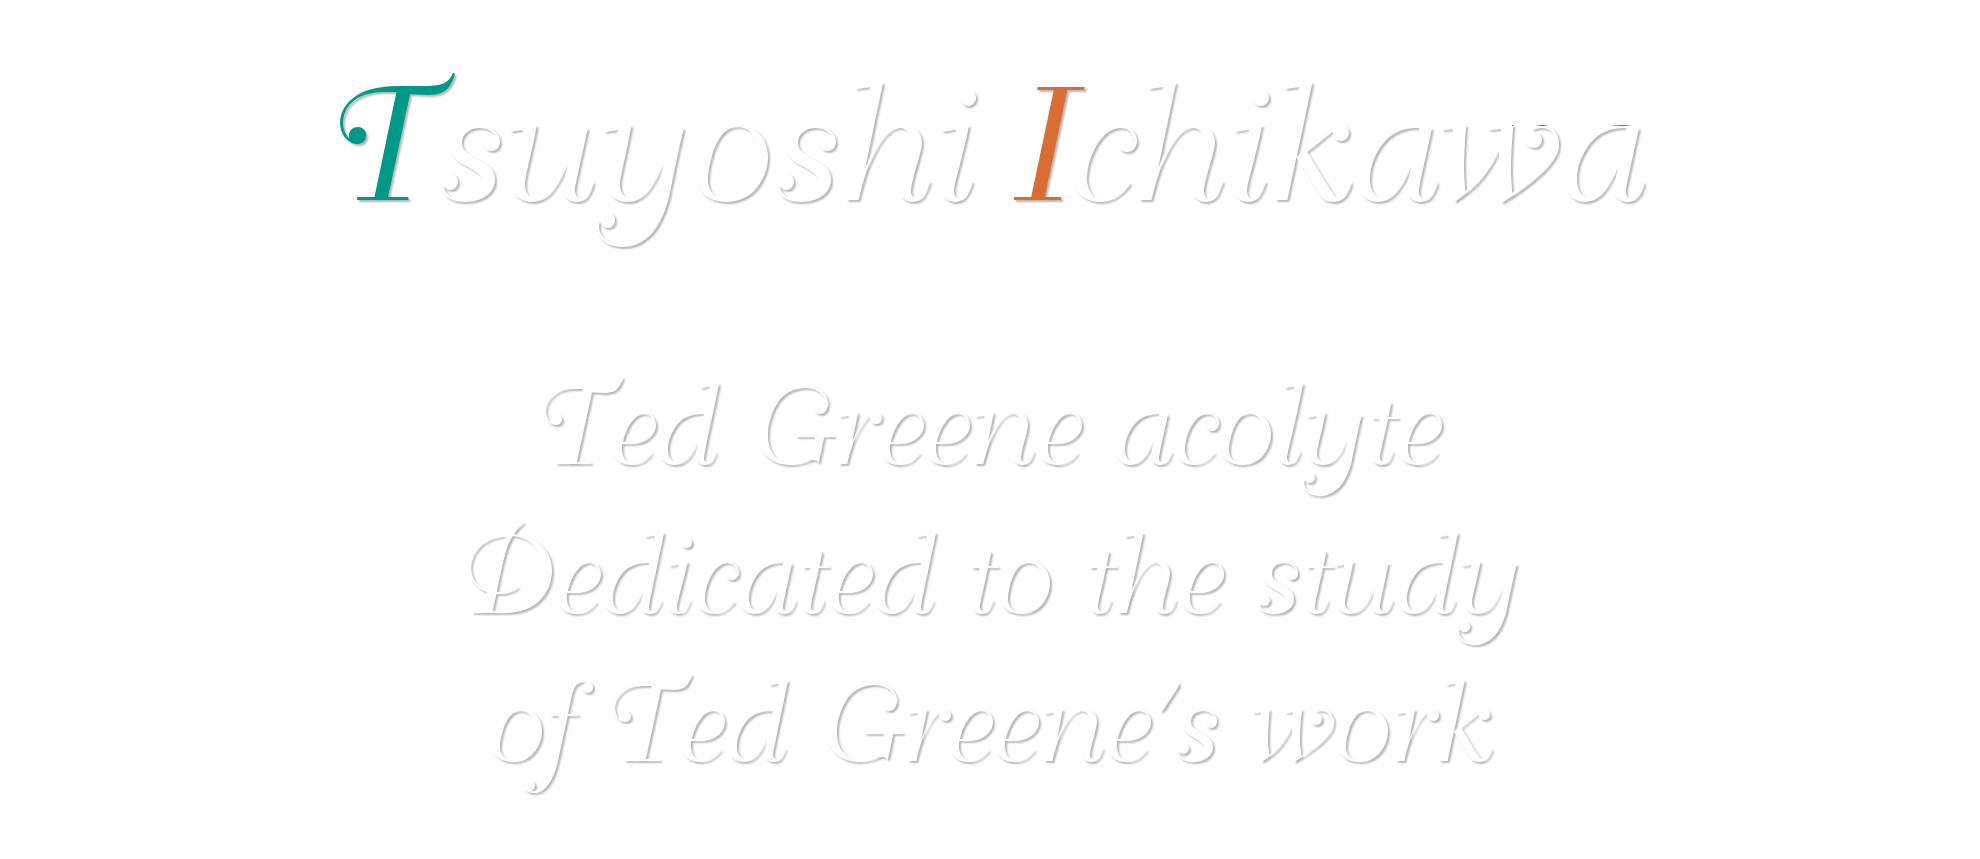 Tsuyoshi Ichikawa Ted Greene acolyte Dedicated to the study of Ted Greene's work